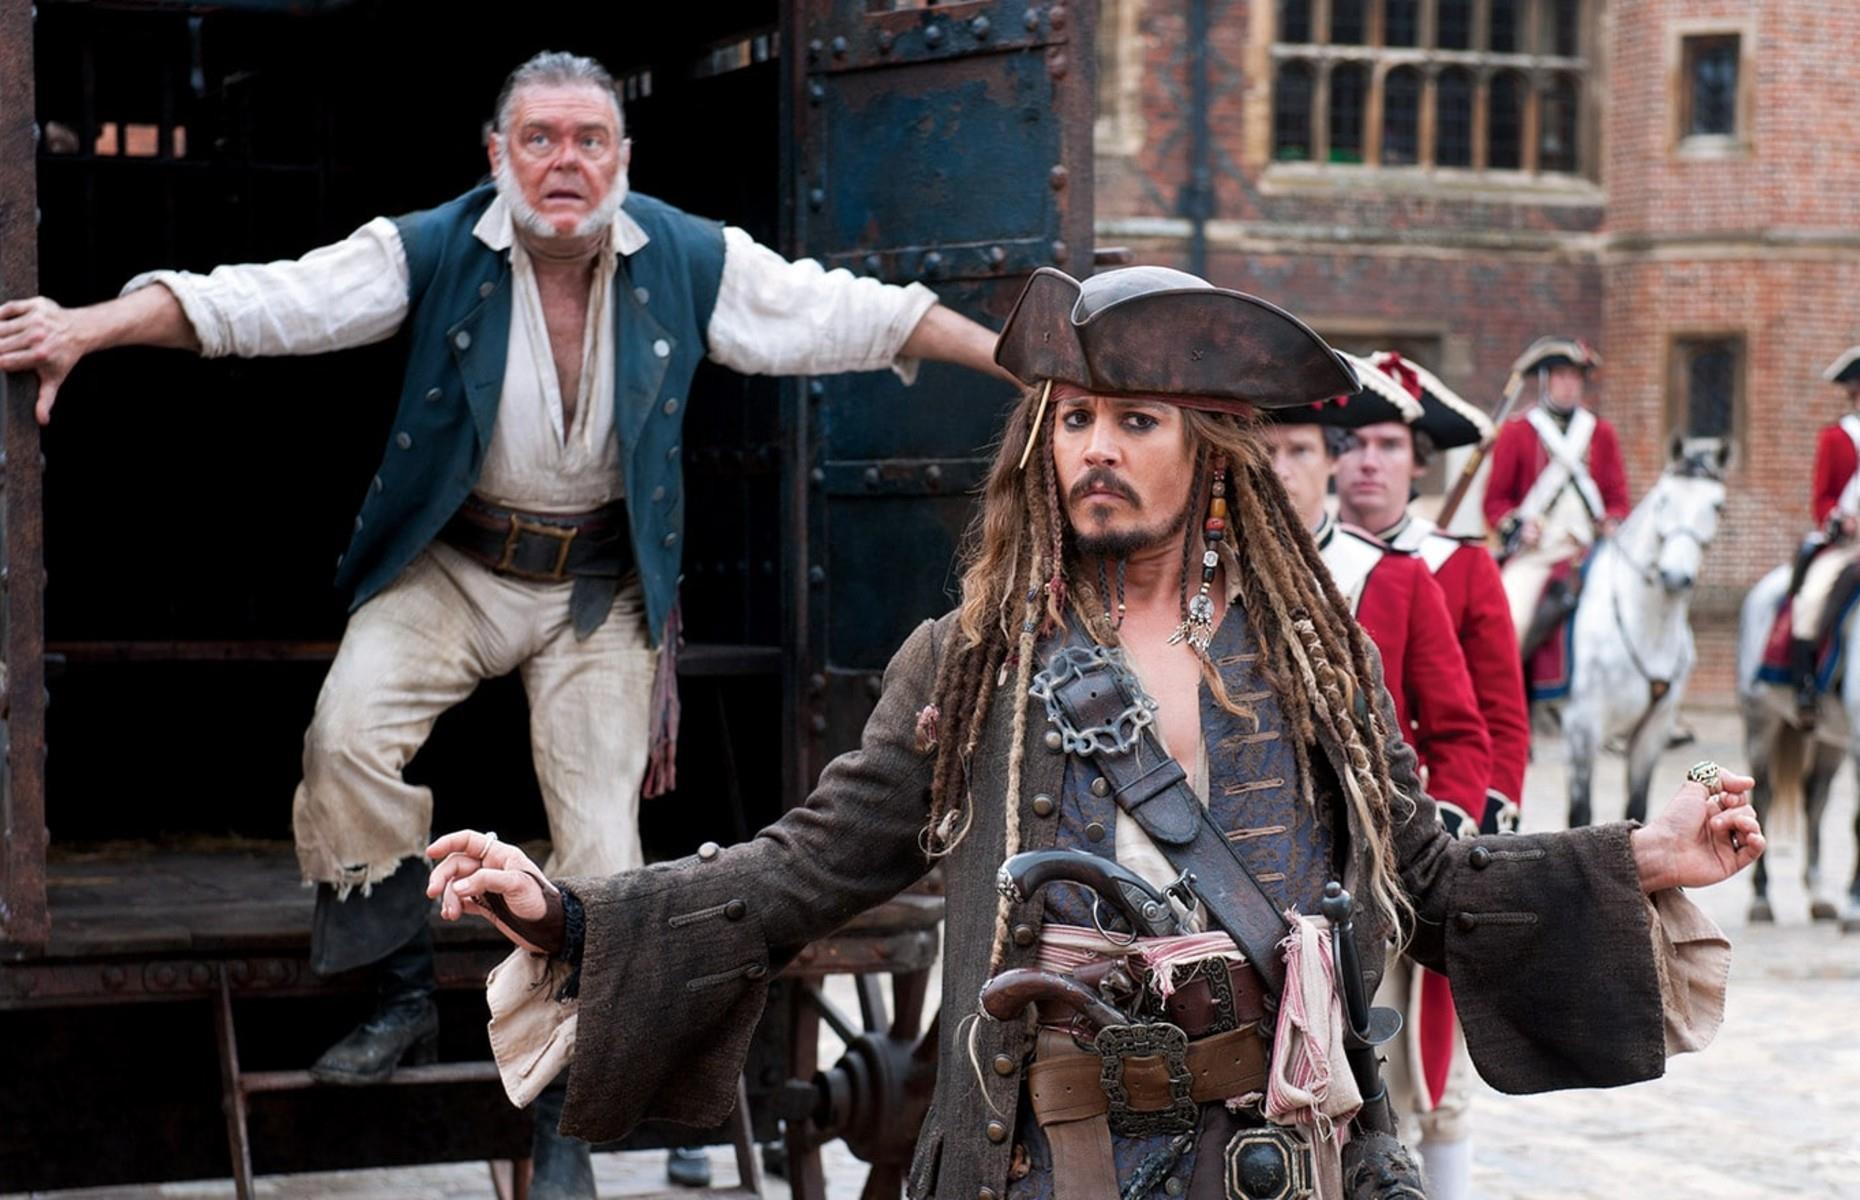 Pirates of the Caribbean: On Stranger Tides (2011) – cost: $378.5 million (£243.8m); profit: $621.5 million (£400.4m)